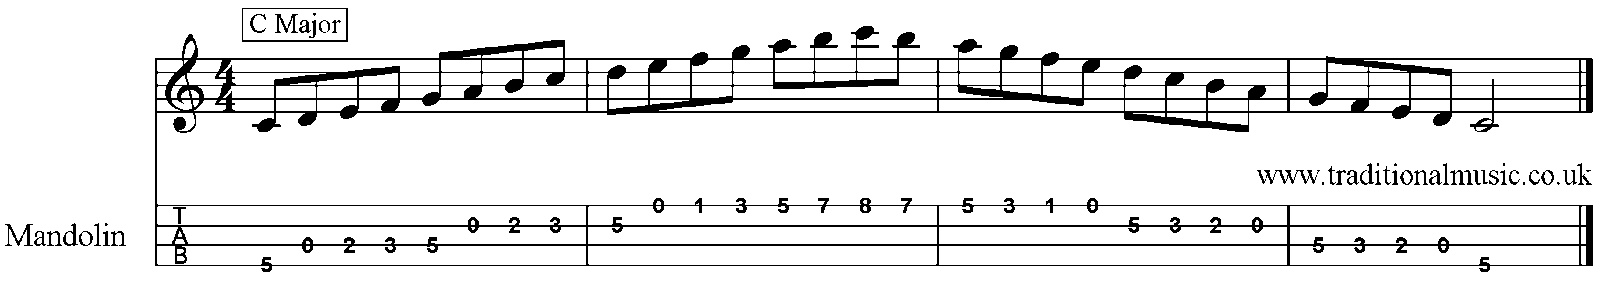 Major Scales for Mandolin C 